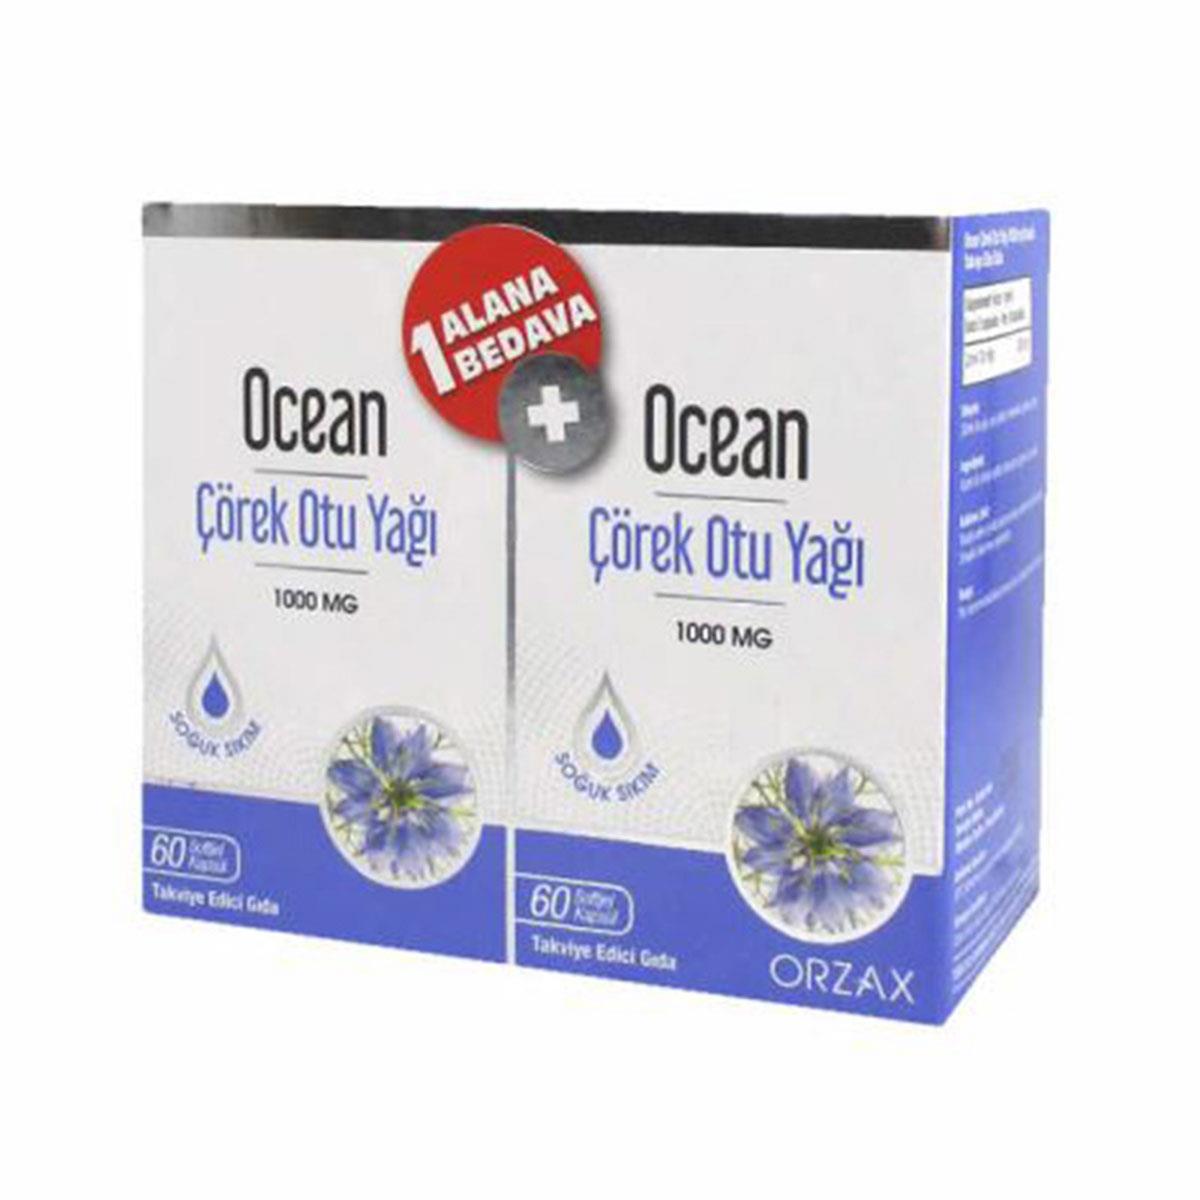 Orzax Ocean Çörek Otu Yağı 1000 mg 2 x 60 Kapsül - Daffne